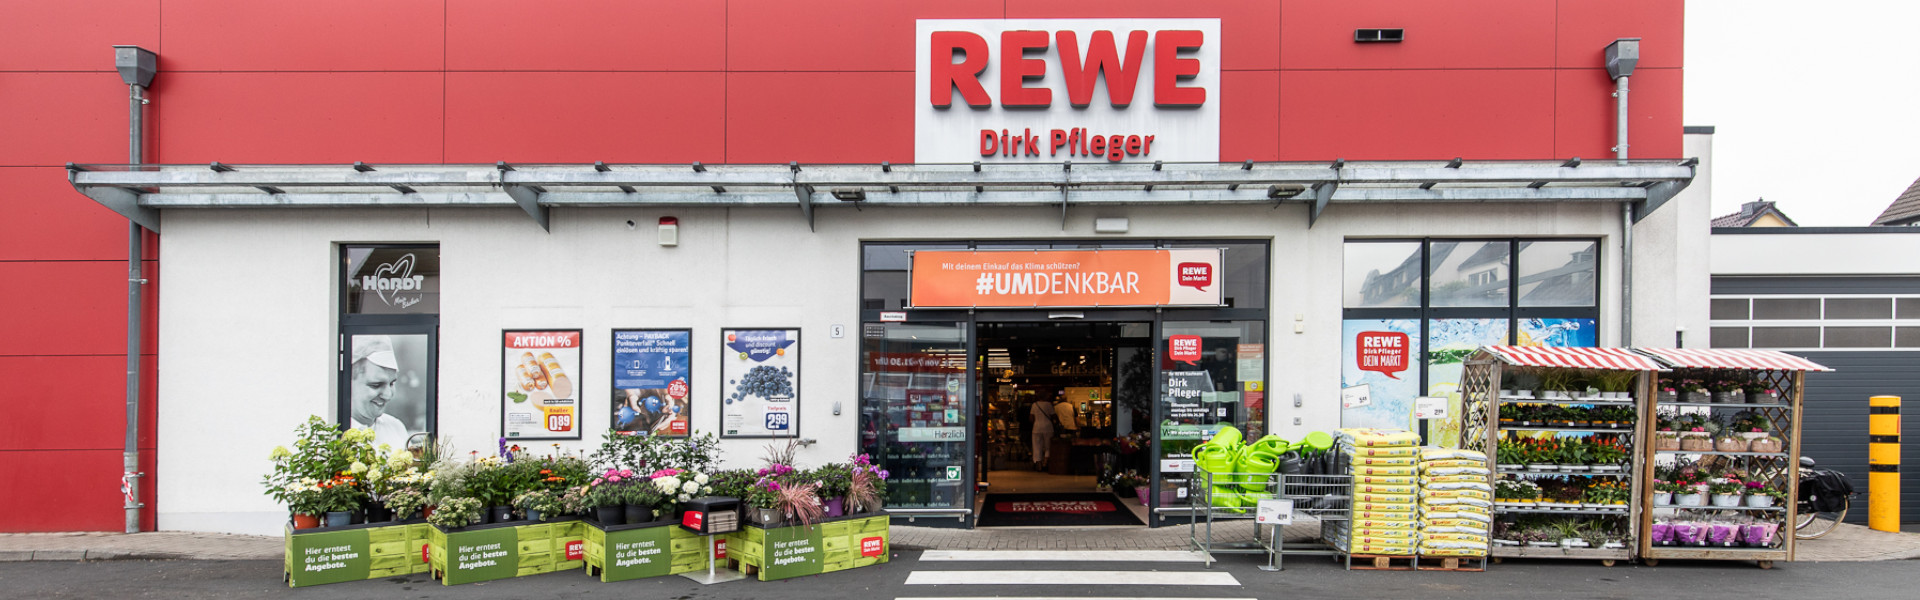 REWE-Dirk-Pfleger-News-Header